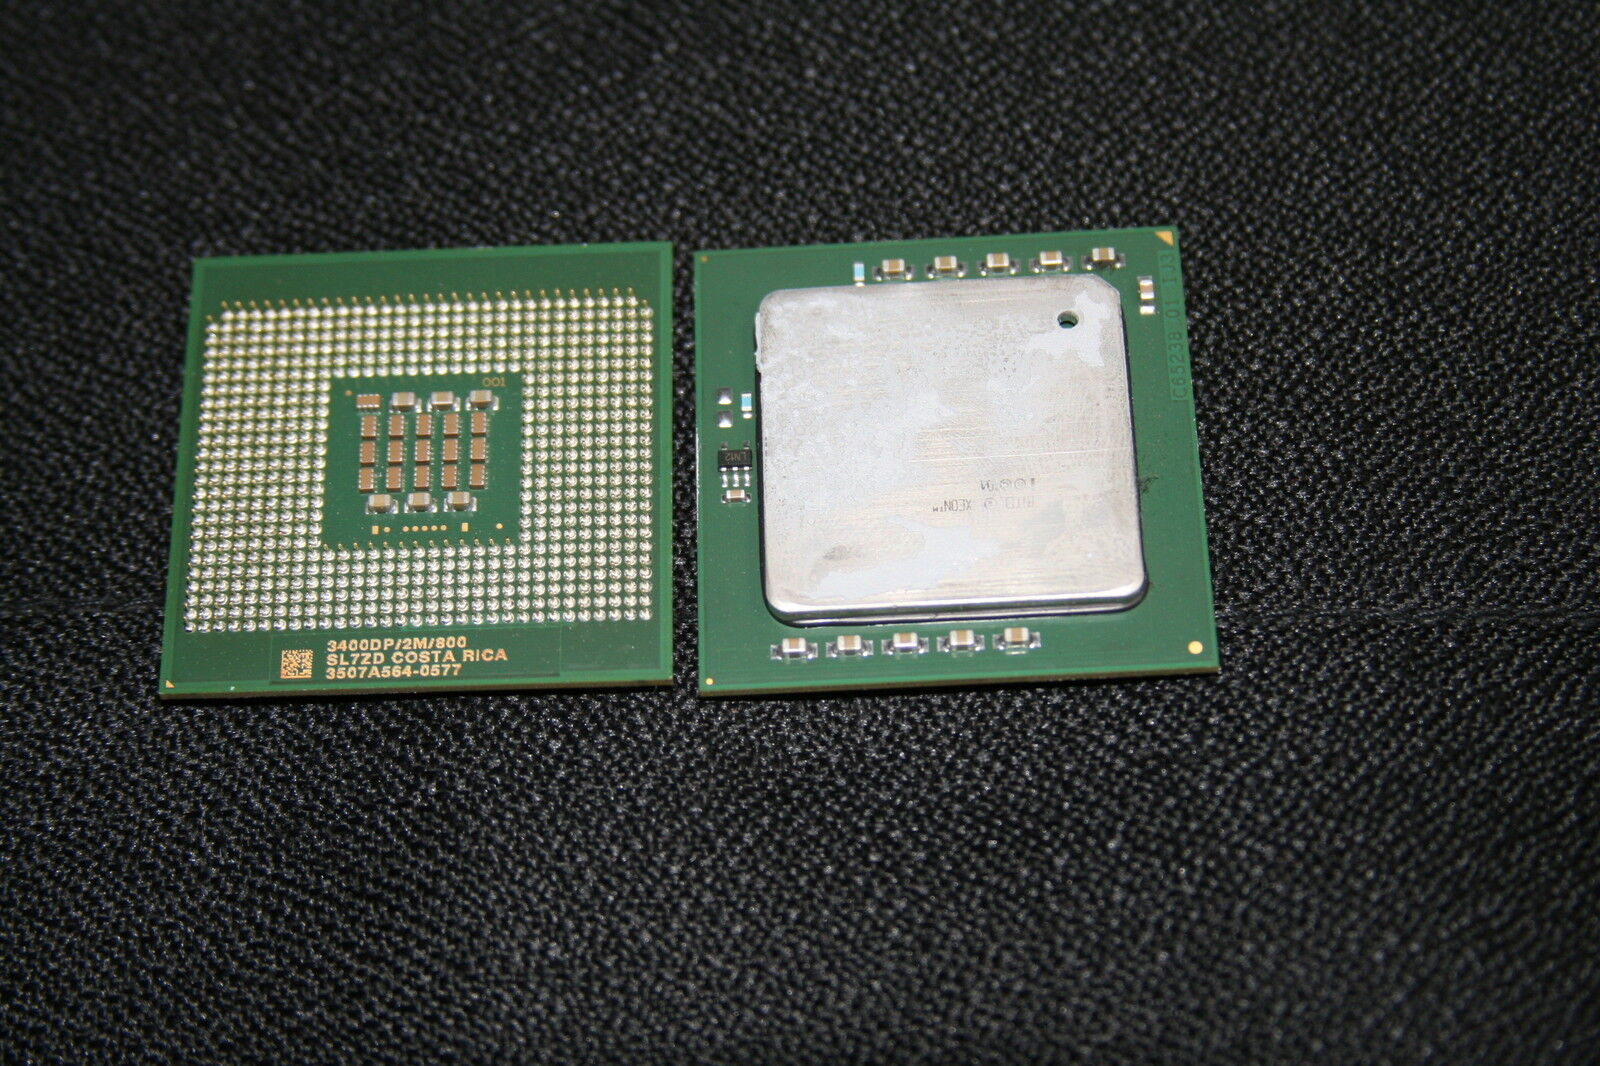 Dell Poweredge 1800,1850,2800, 2850 Server Pair (2) Intel Xeon 2.8GHz CPU 